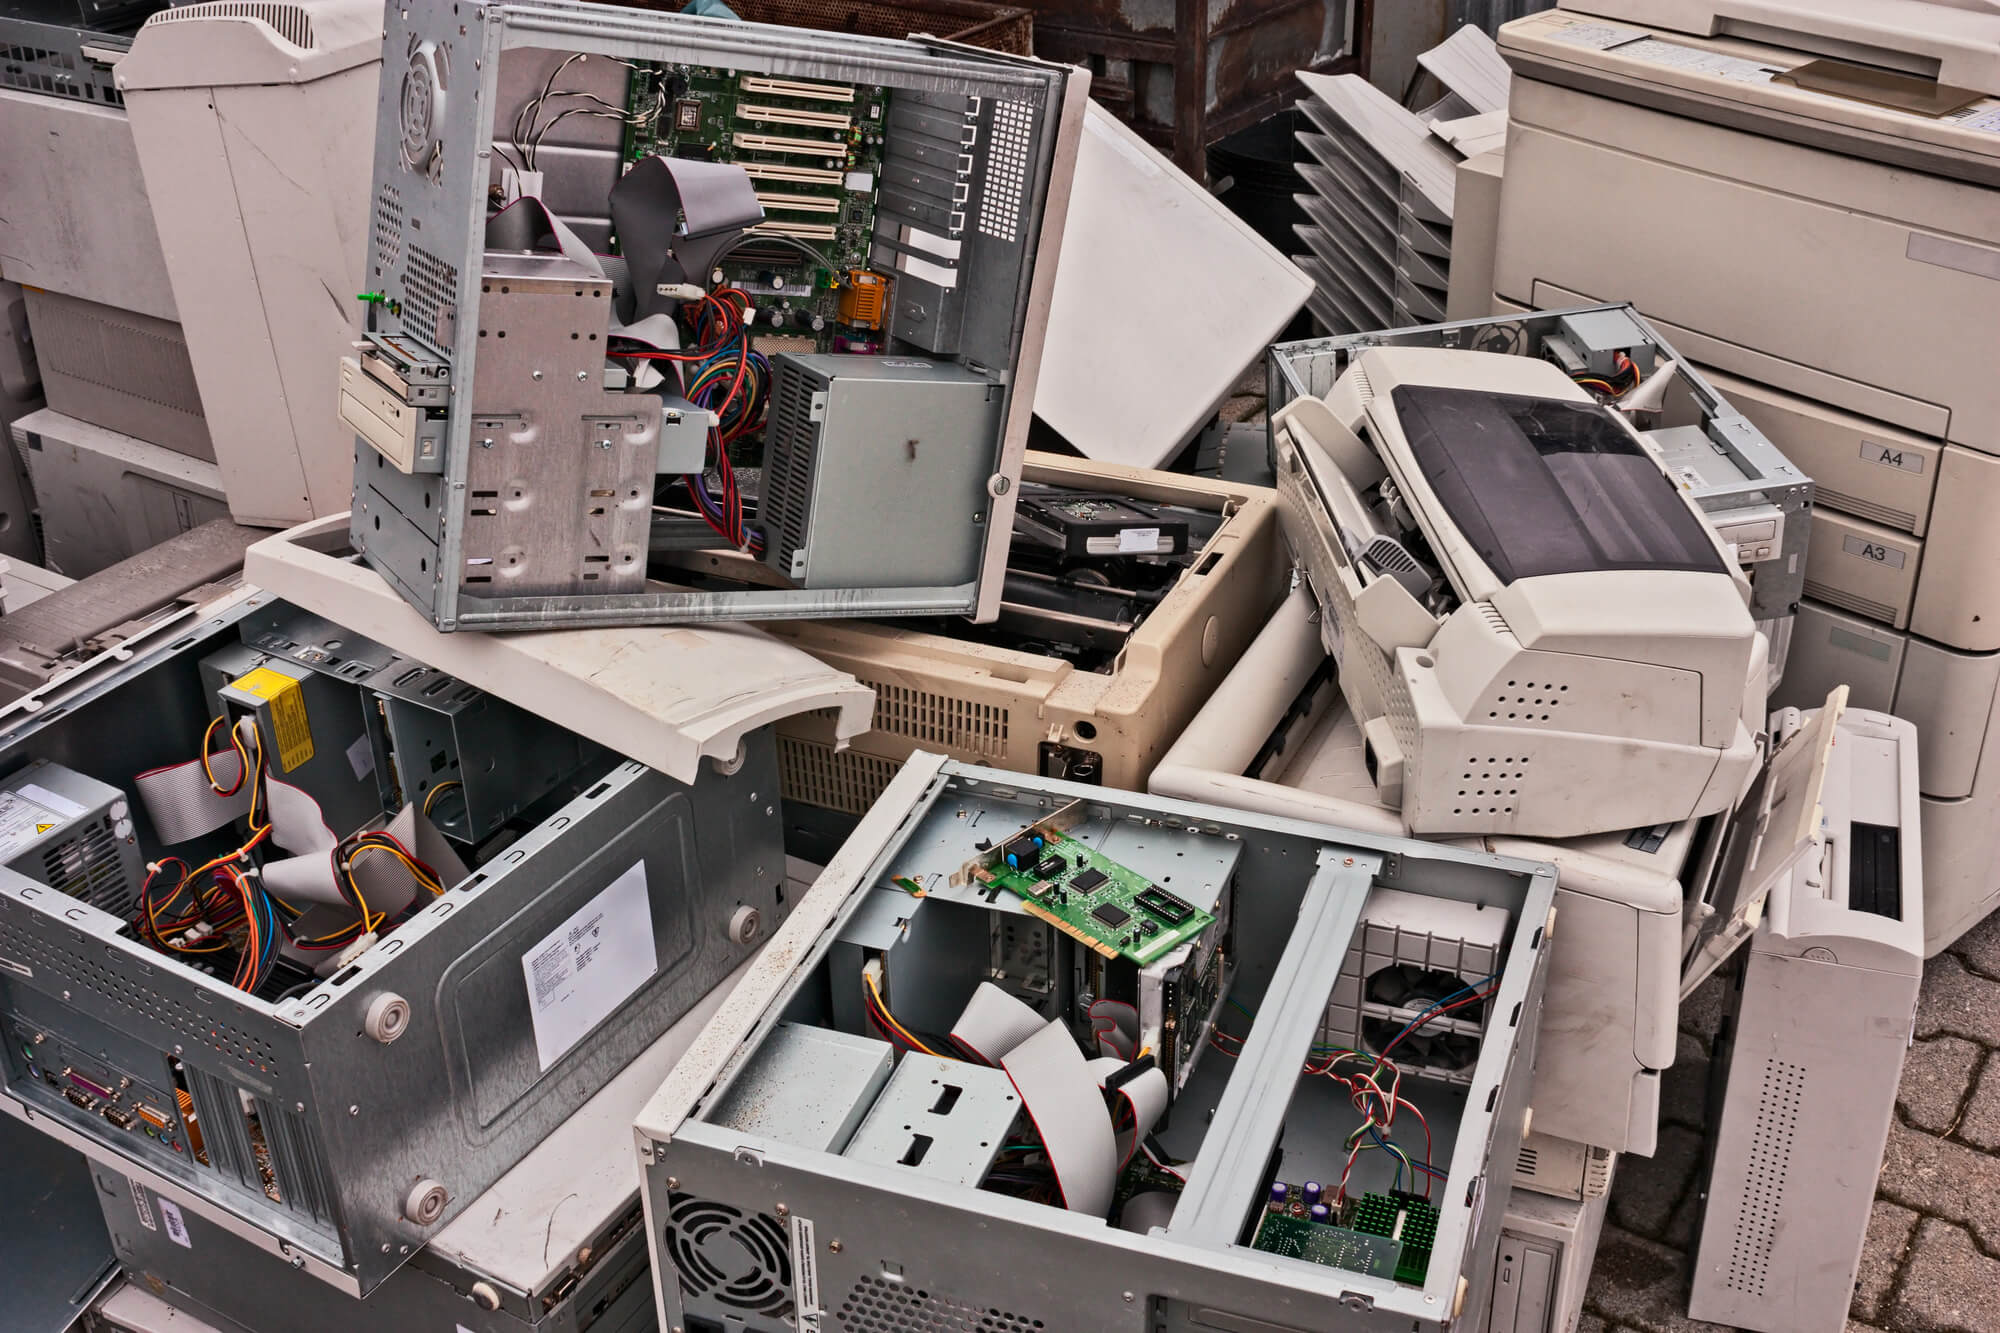 Pile of computer rubbish